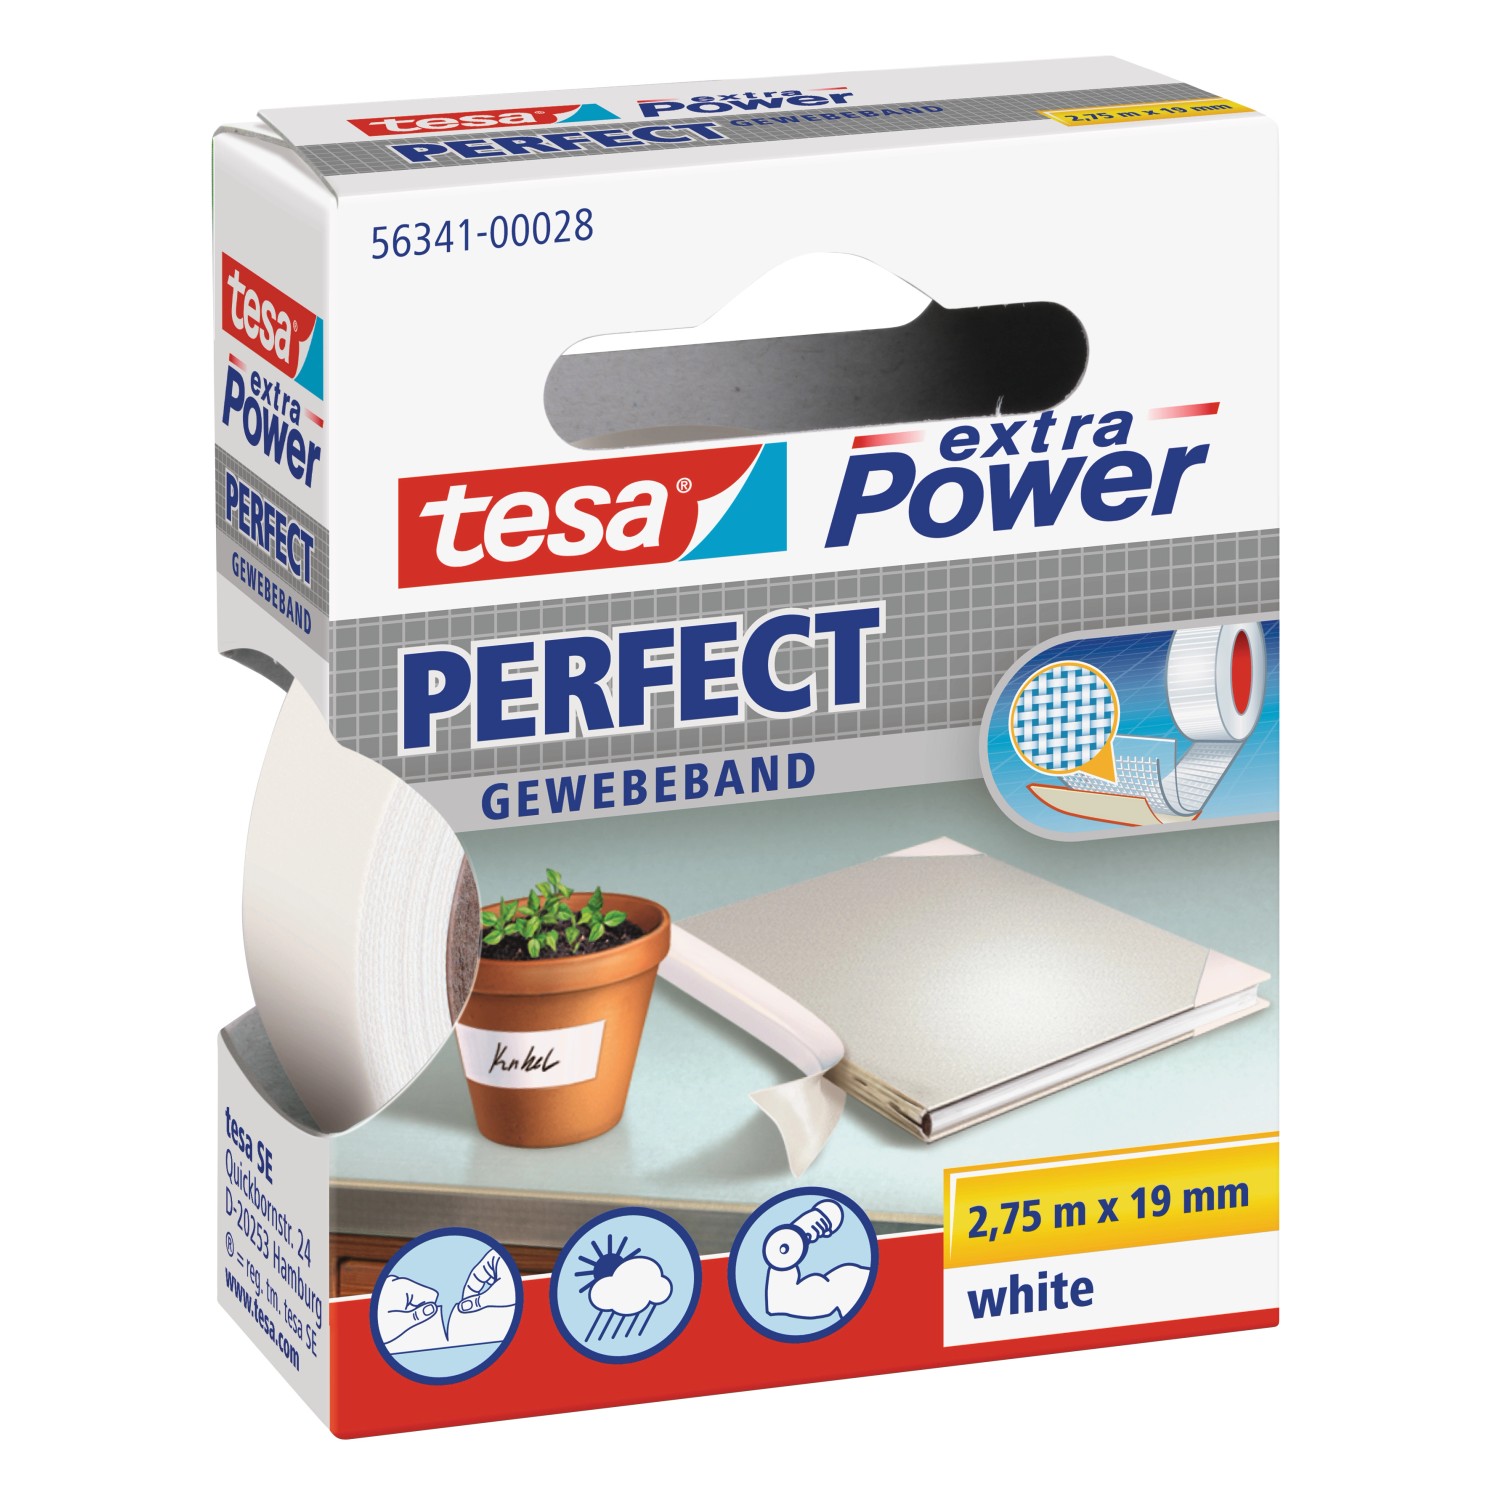 Tesa Extra Power Perfect Gewebeband Weiß 2,75 m x 19 mm